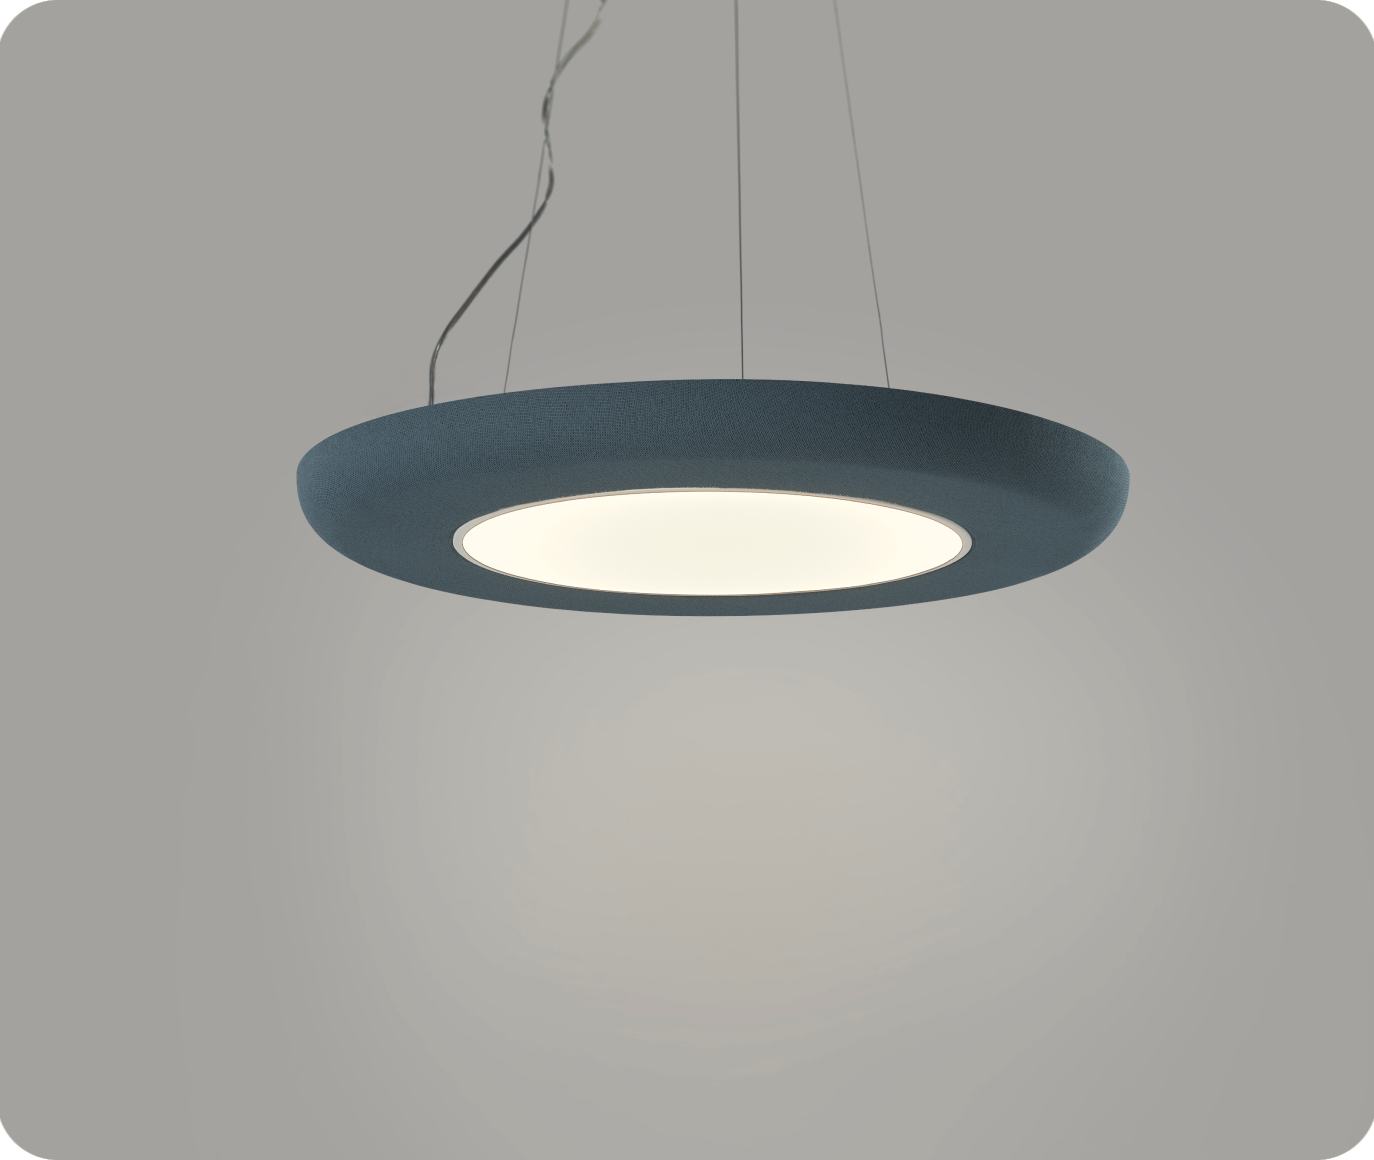 Mute Loop Pendant Lamp in Dusk Blue fabric - task lighting